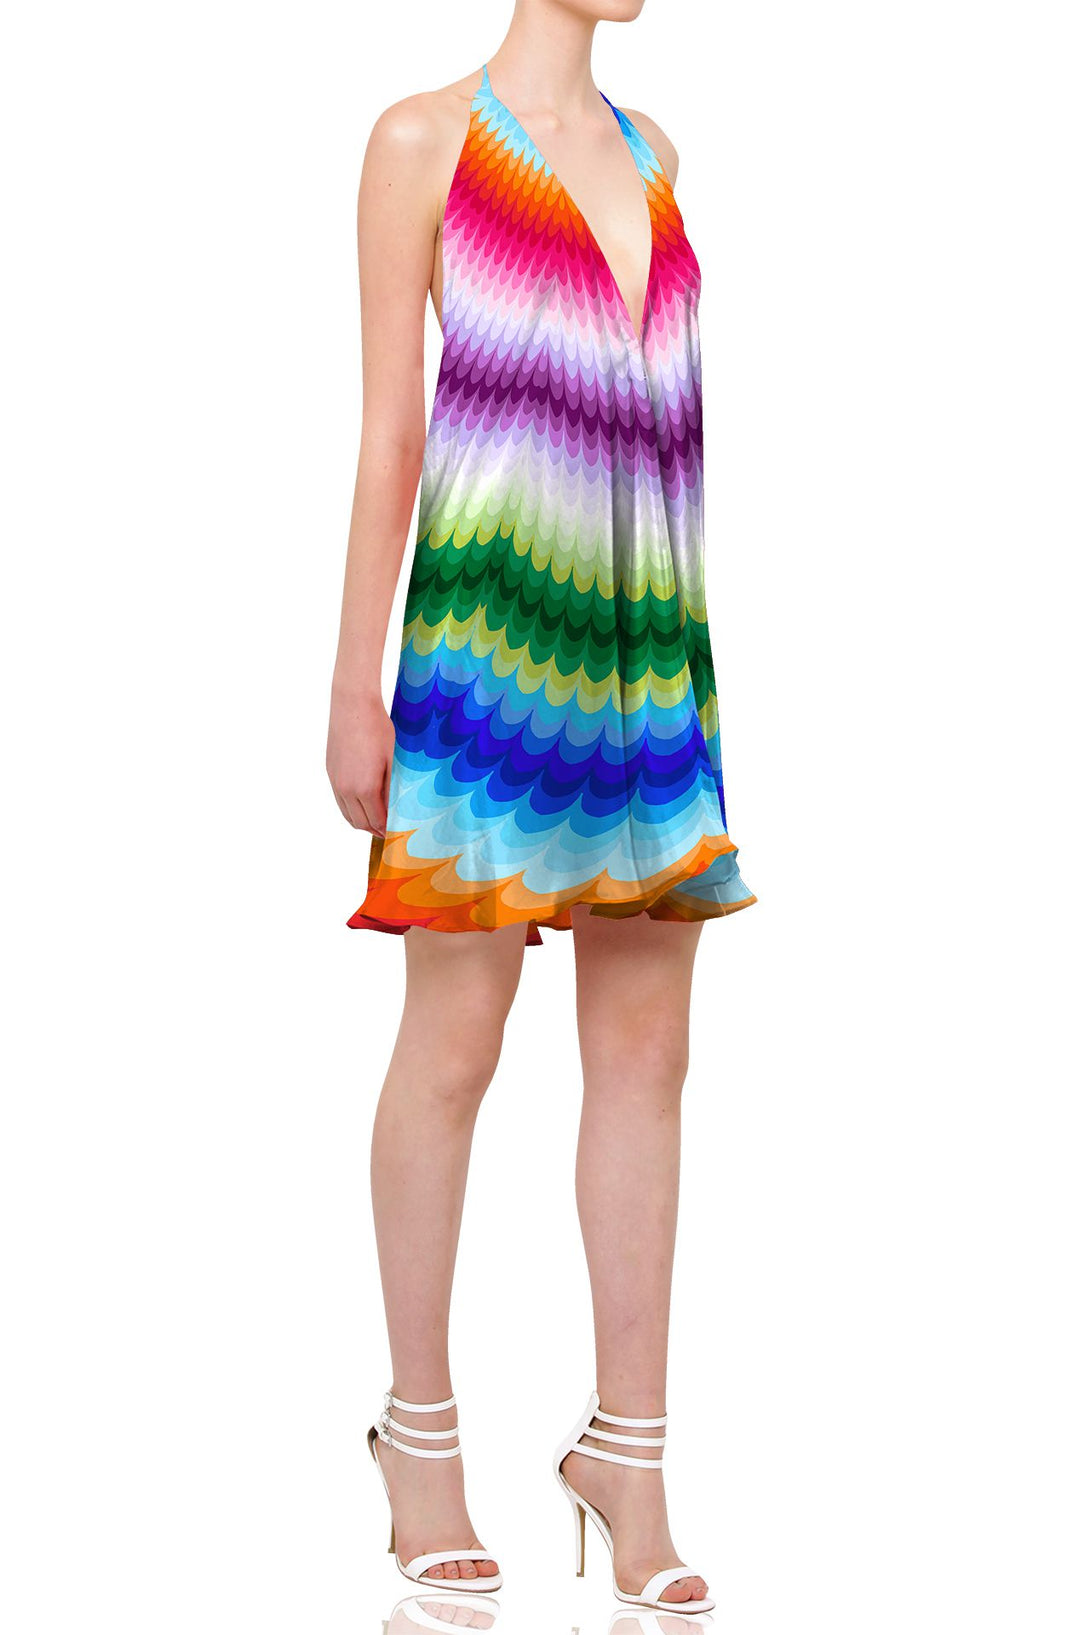  multicolored dress, Shahida Parides, sexy mini dresses for women, sleeveless mini dress,